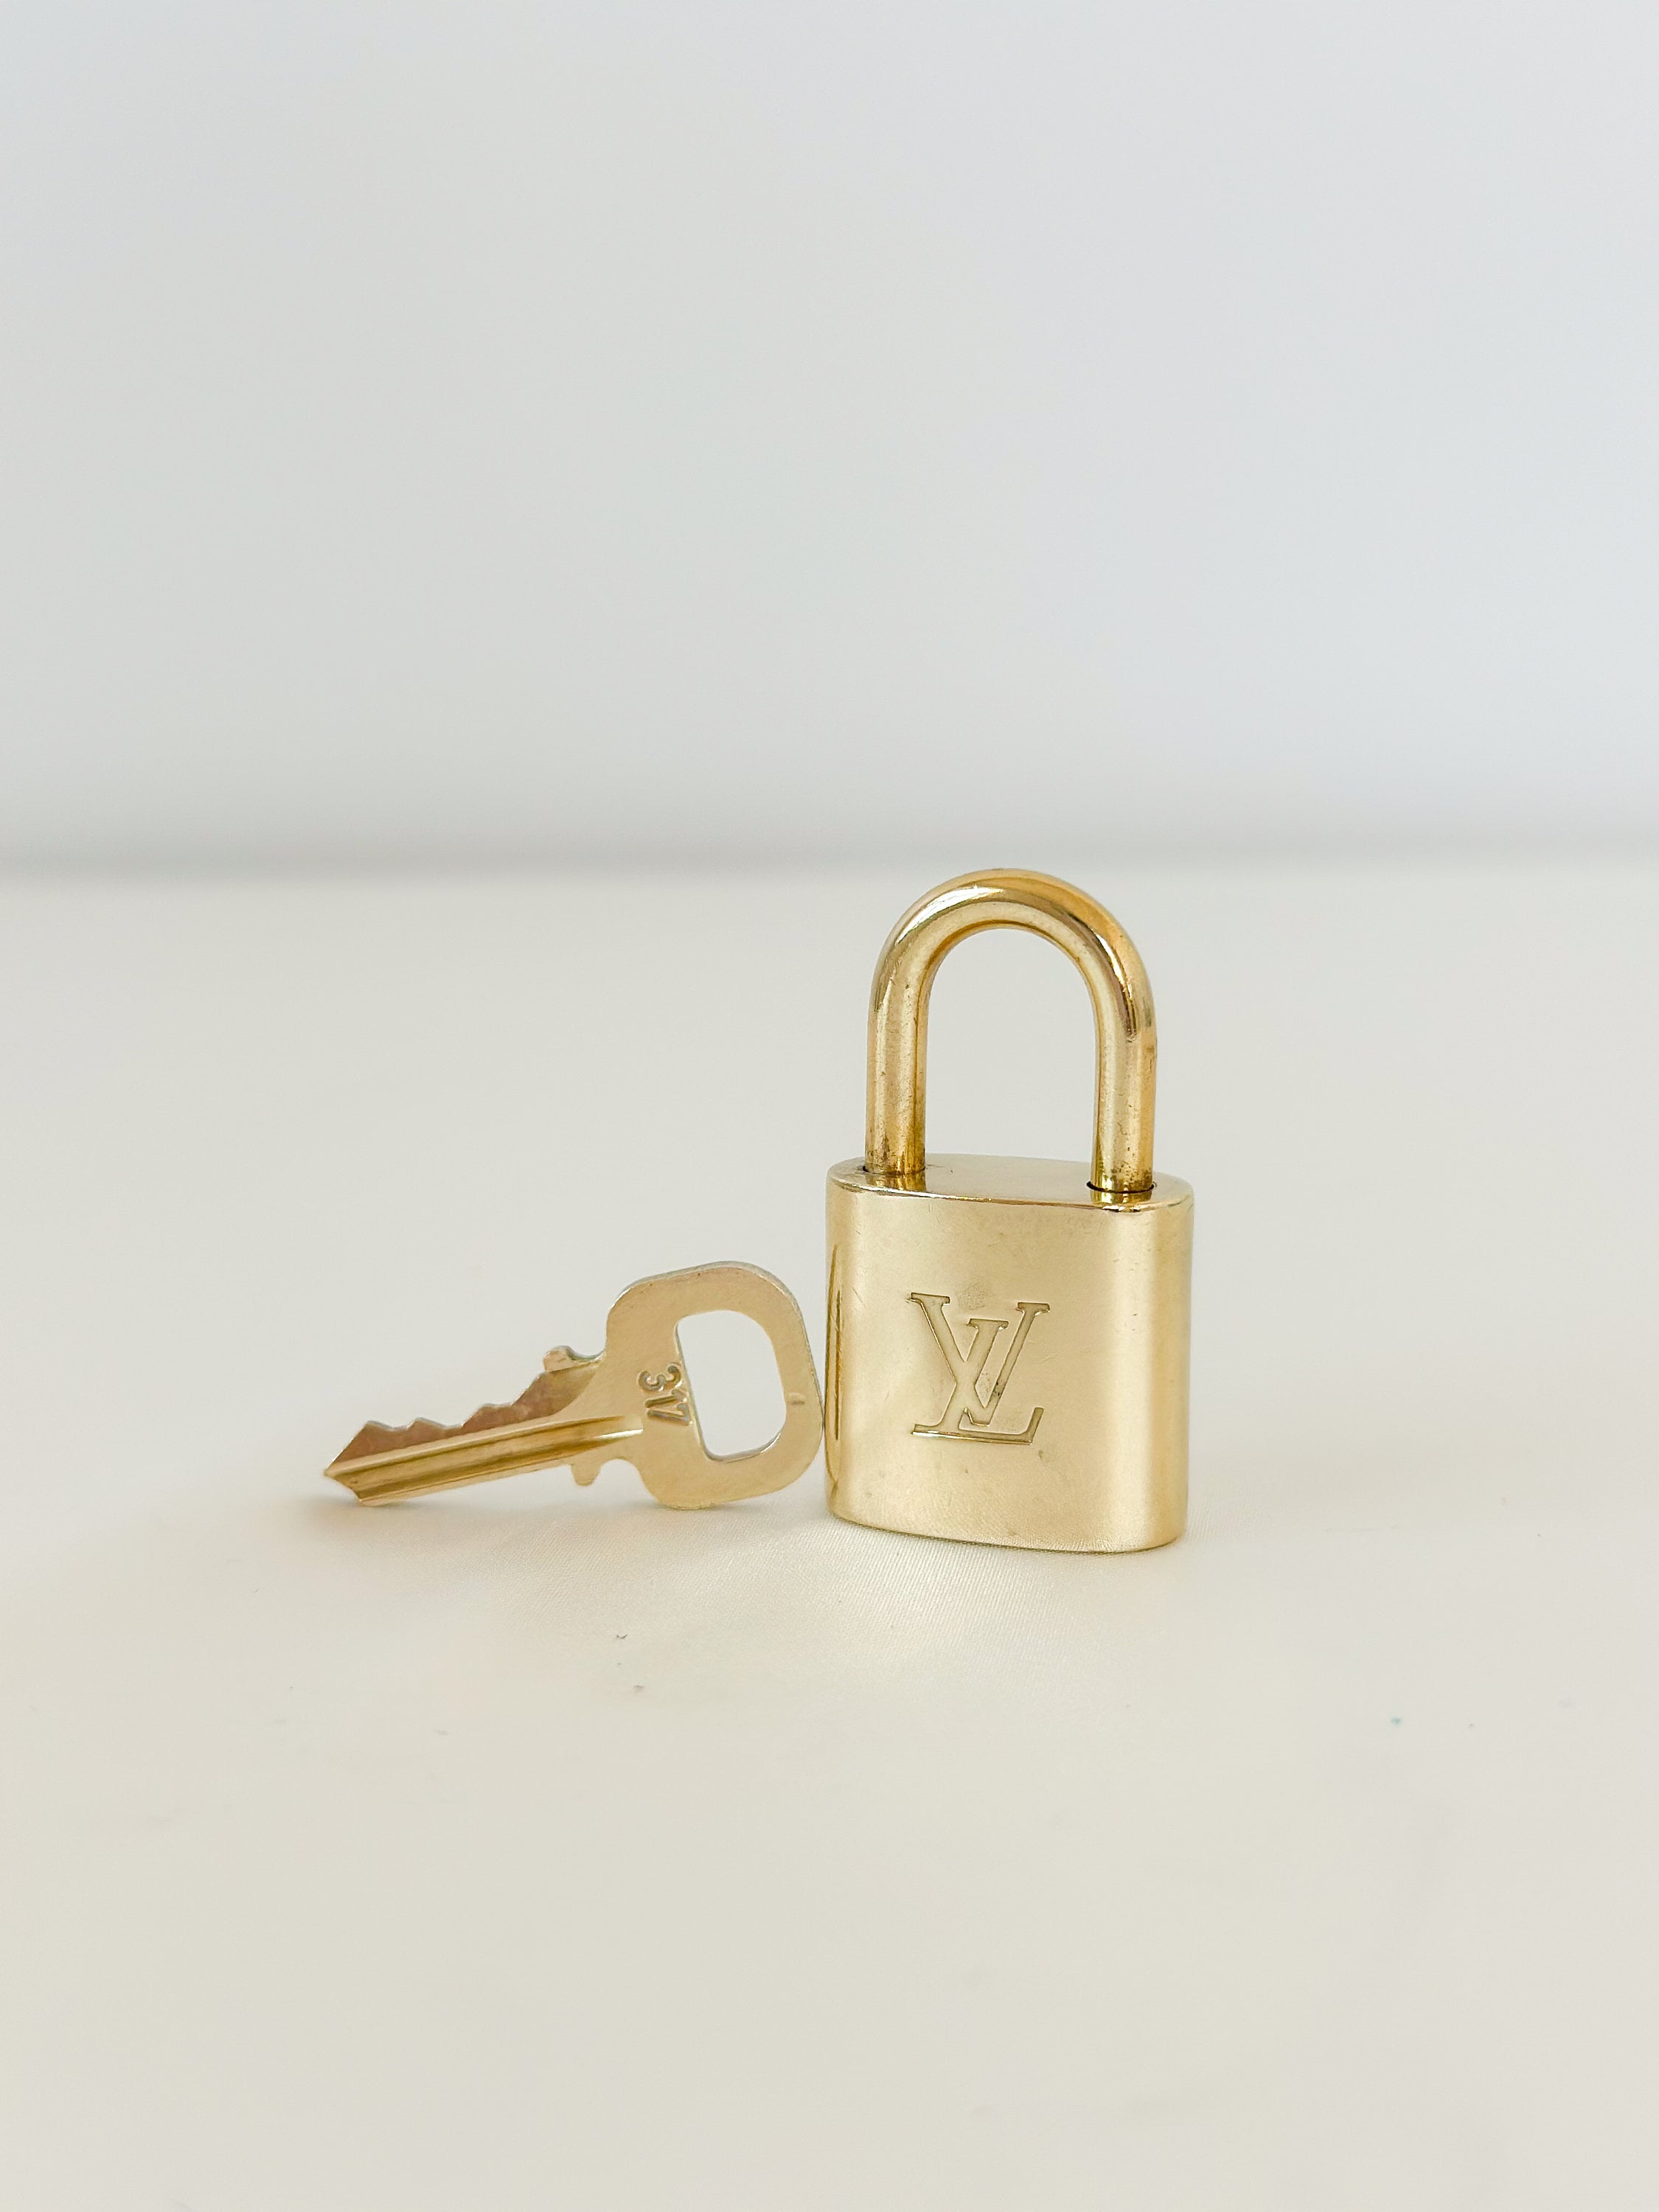 Louis Vuitton Vintage Bag Charm Padlock Key. On website search for